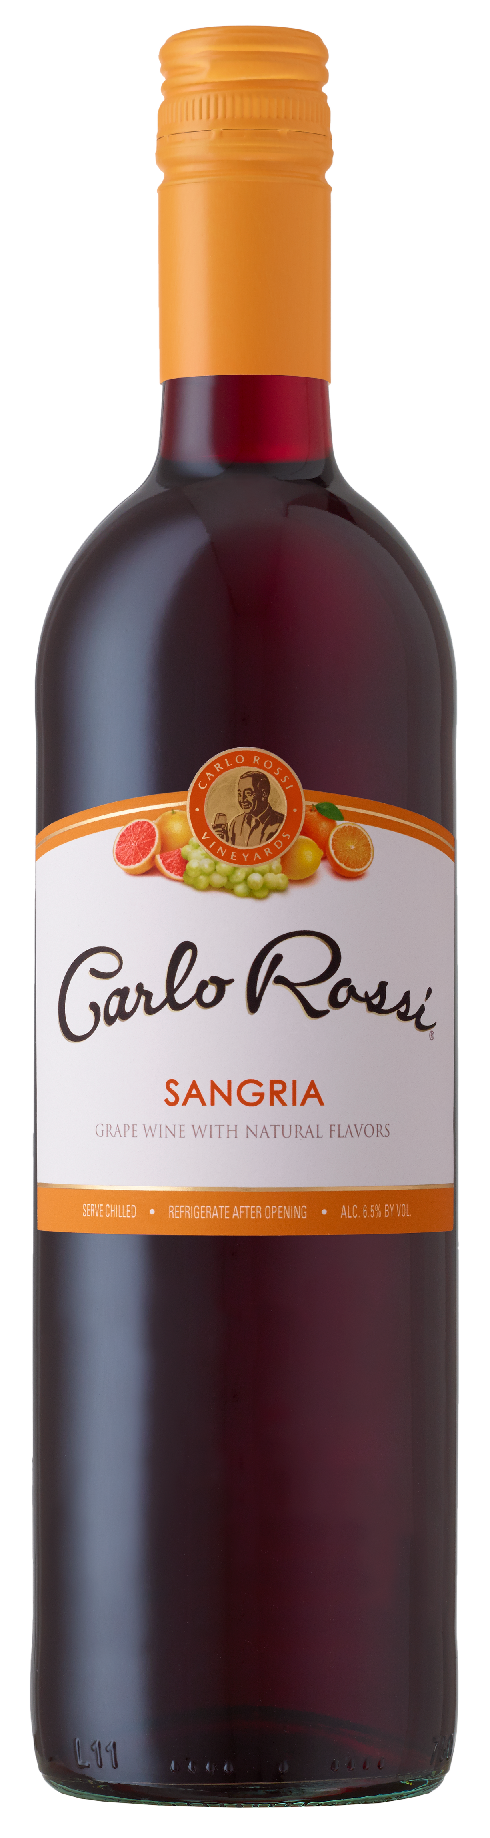 CARLOS ROSSI SANGRIA - Bk Wine Depot Corp